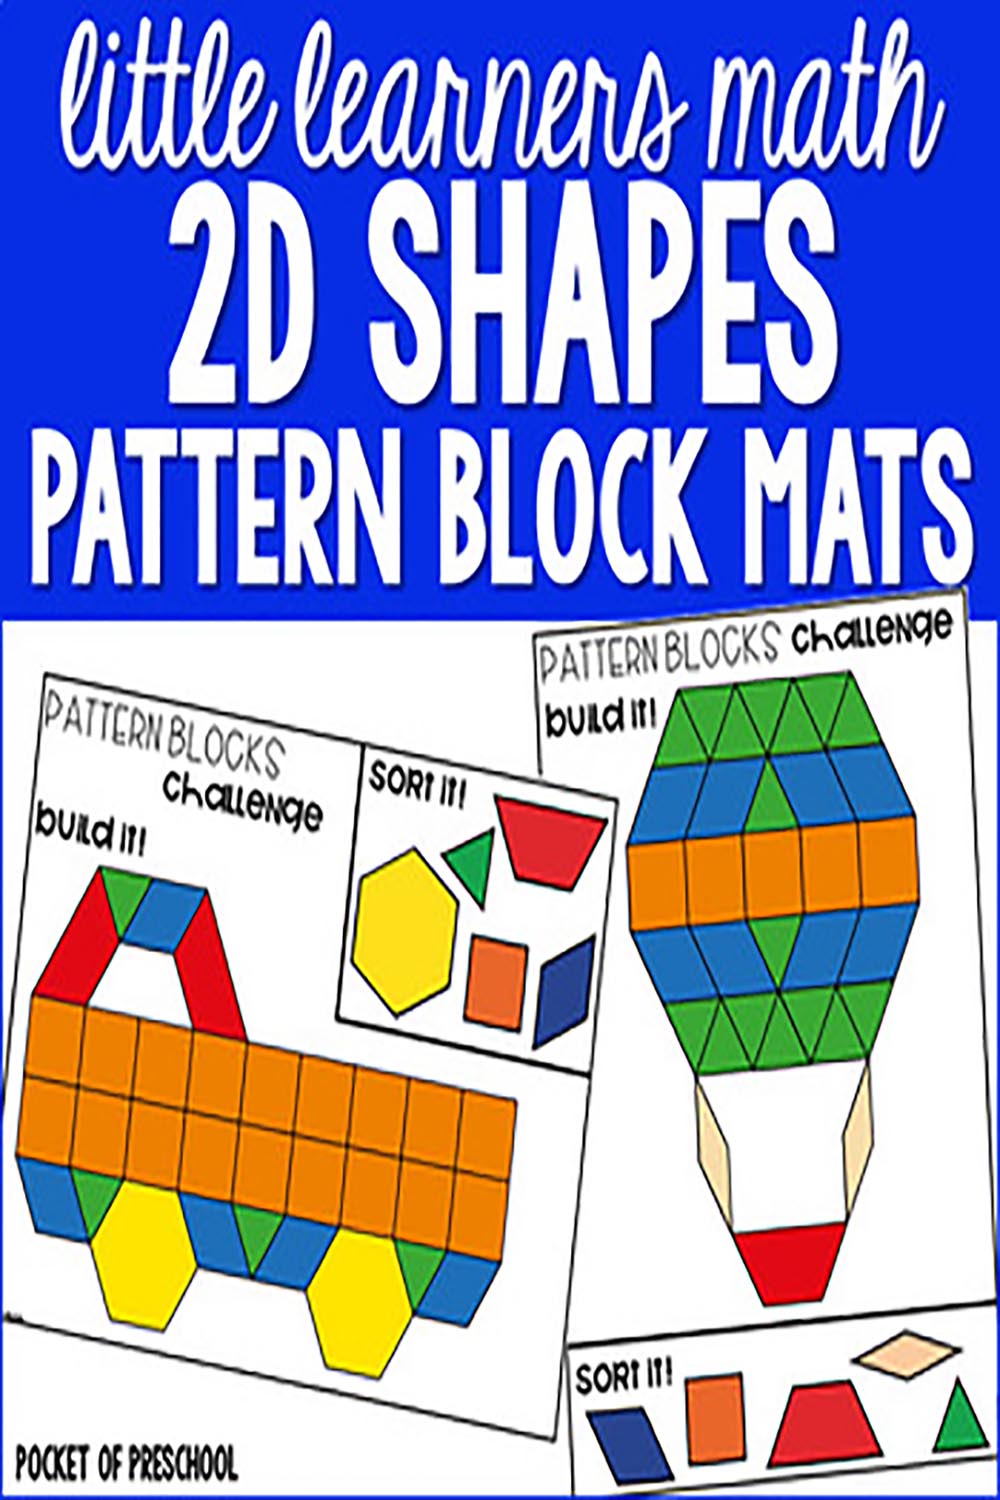 Pattern Block Mats - 2D Shapes Sample Pack for Preschool, Pre-K, and Kinder pinterest preview image.